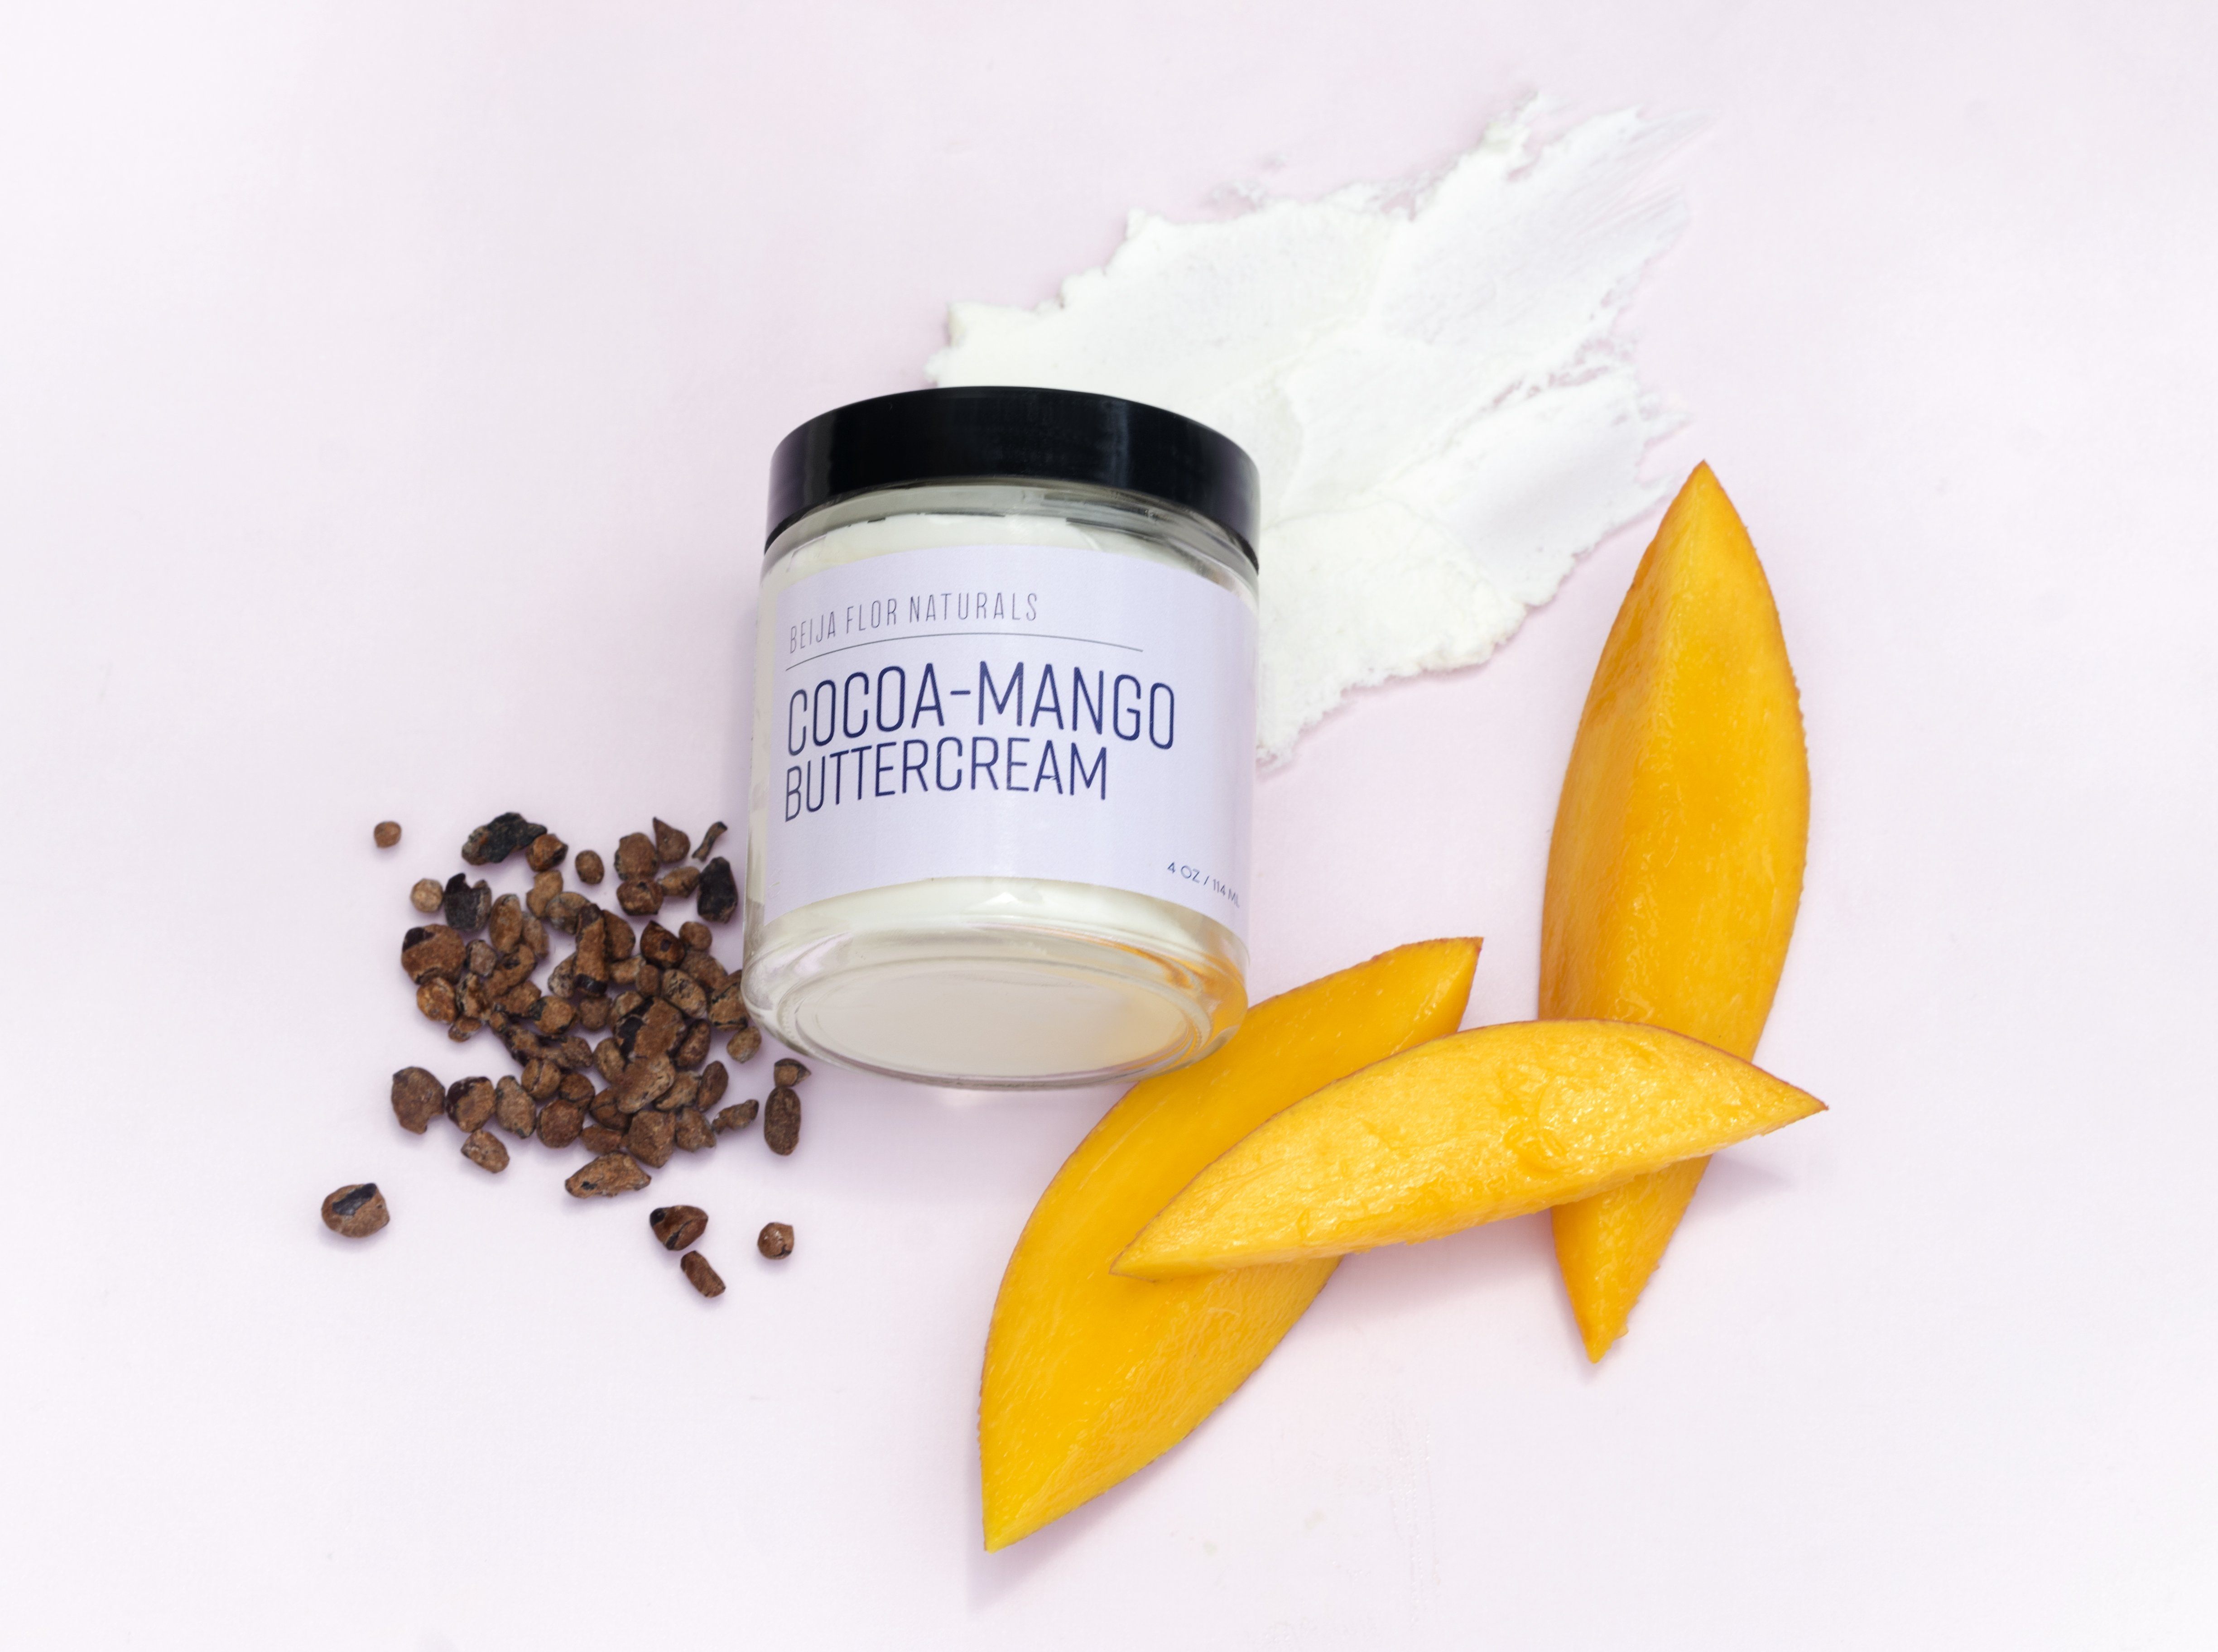 Cocoa-Mango Buttercream BeijaFlorNaturals 